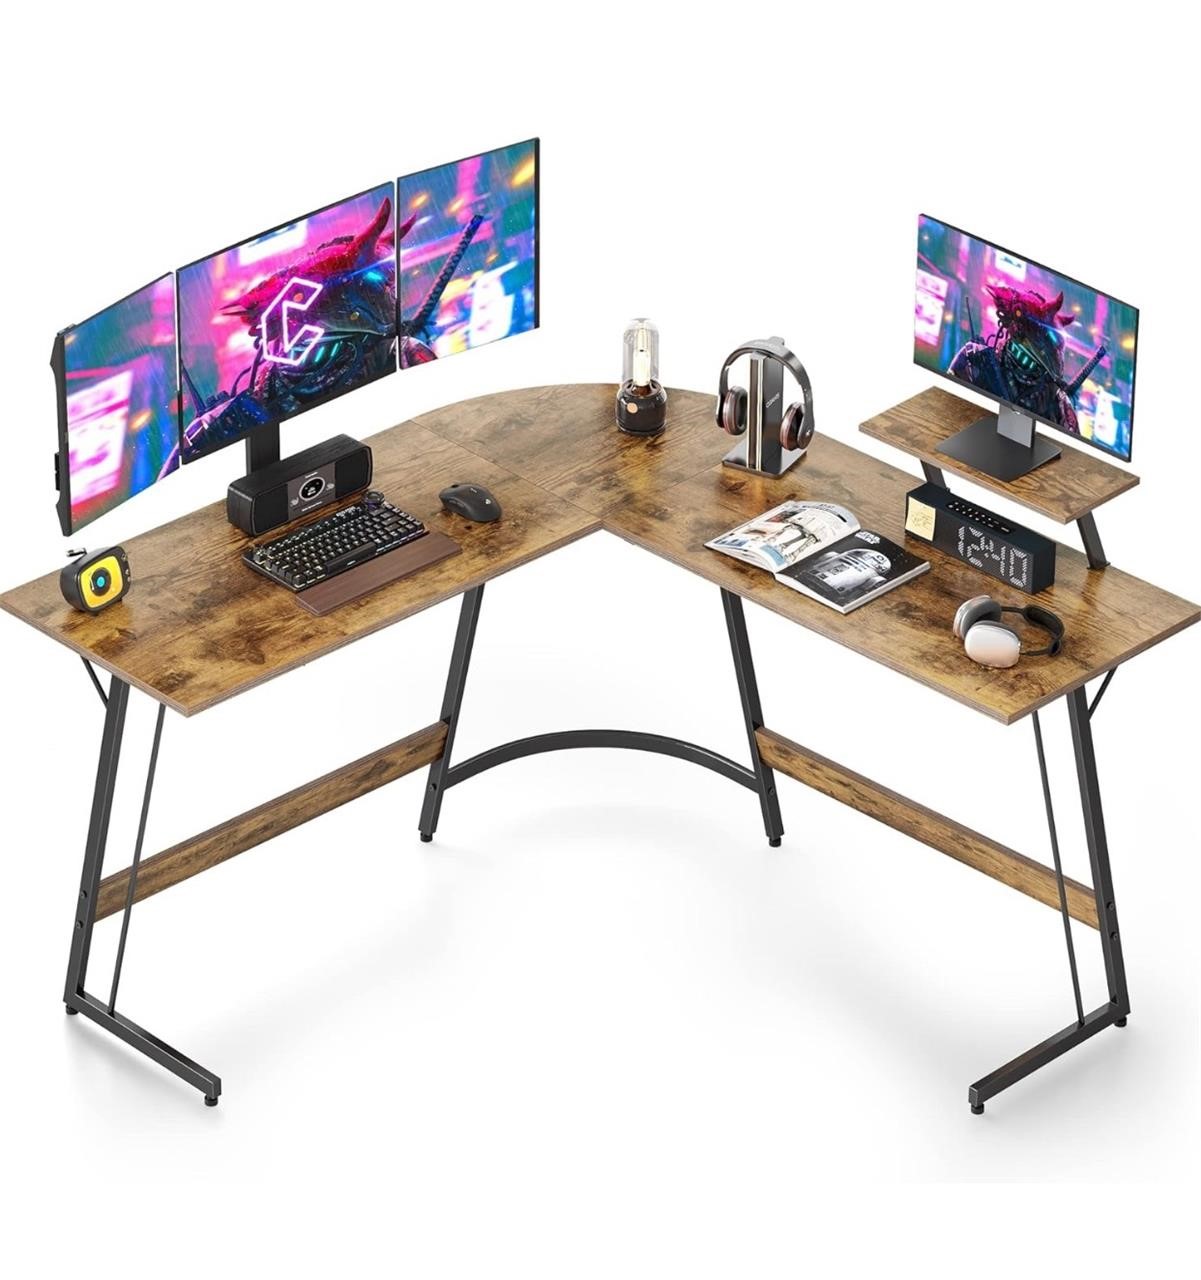 NEW $162 (52.1") L Shaped Desk